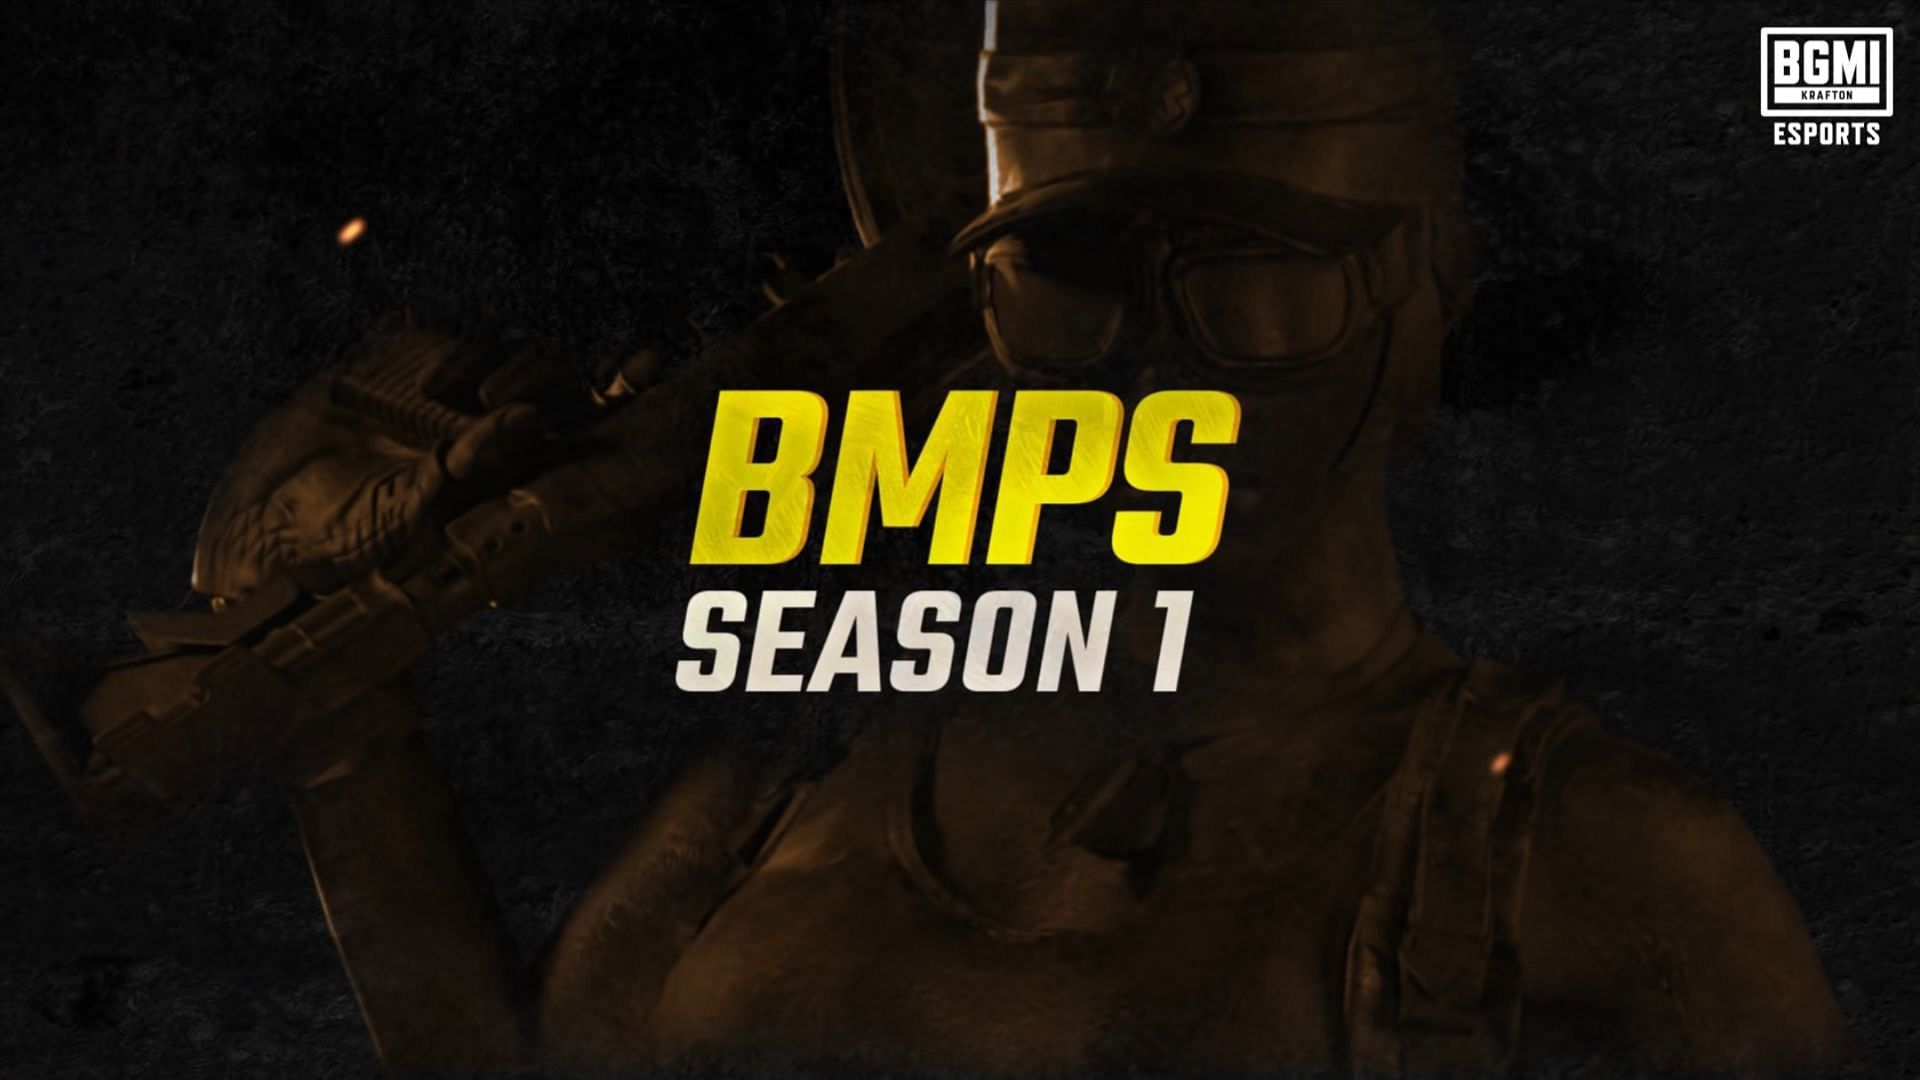 BMPS Season 1 will start on May 19 (Image via BGMI)